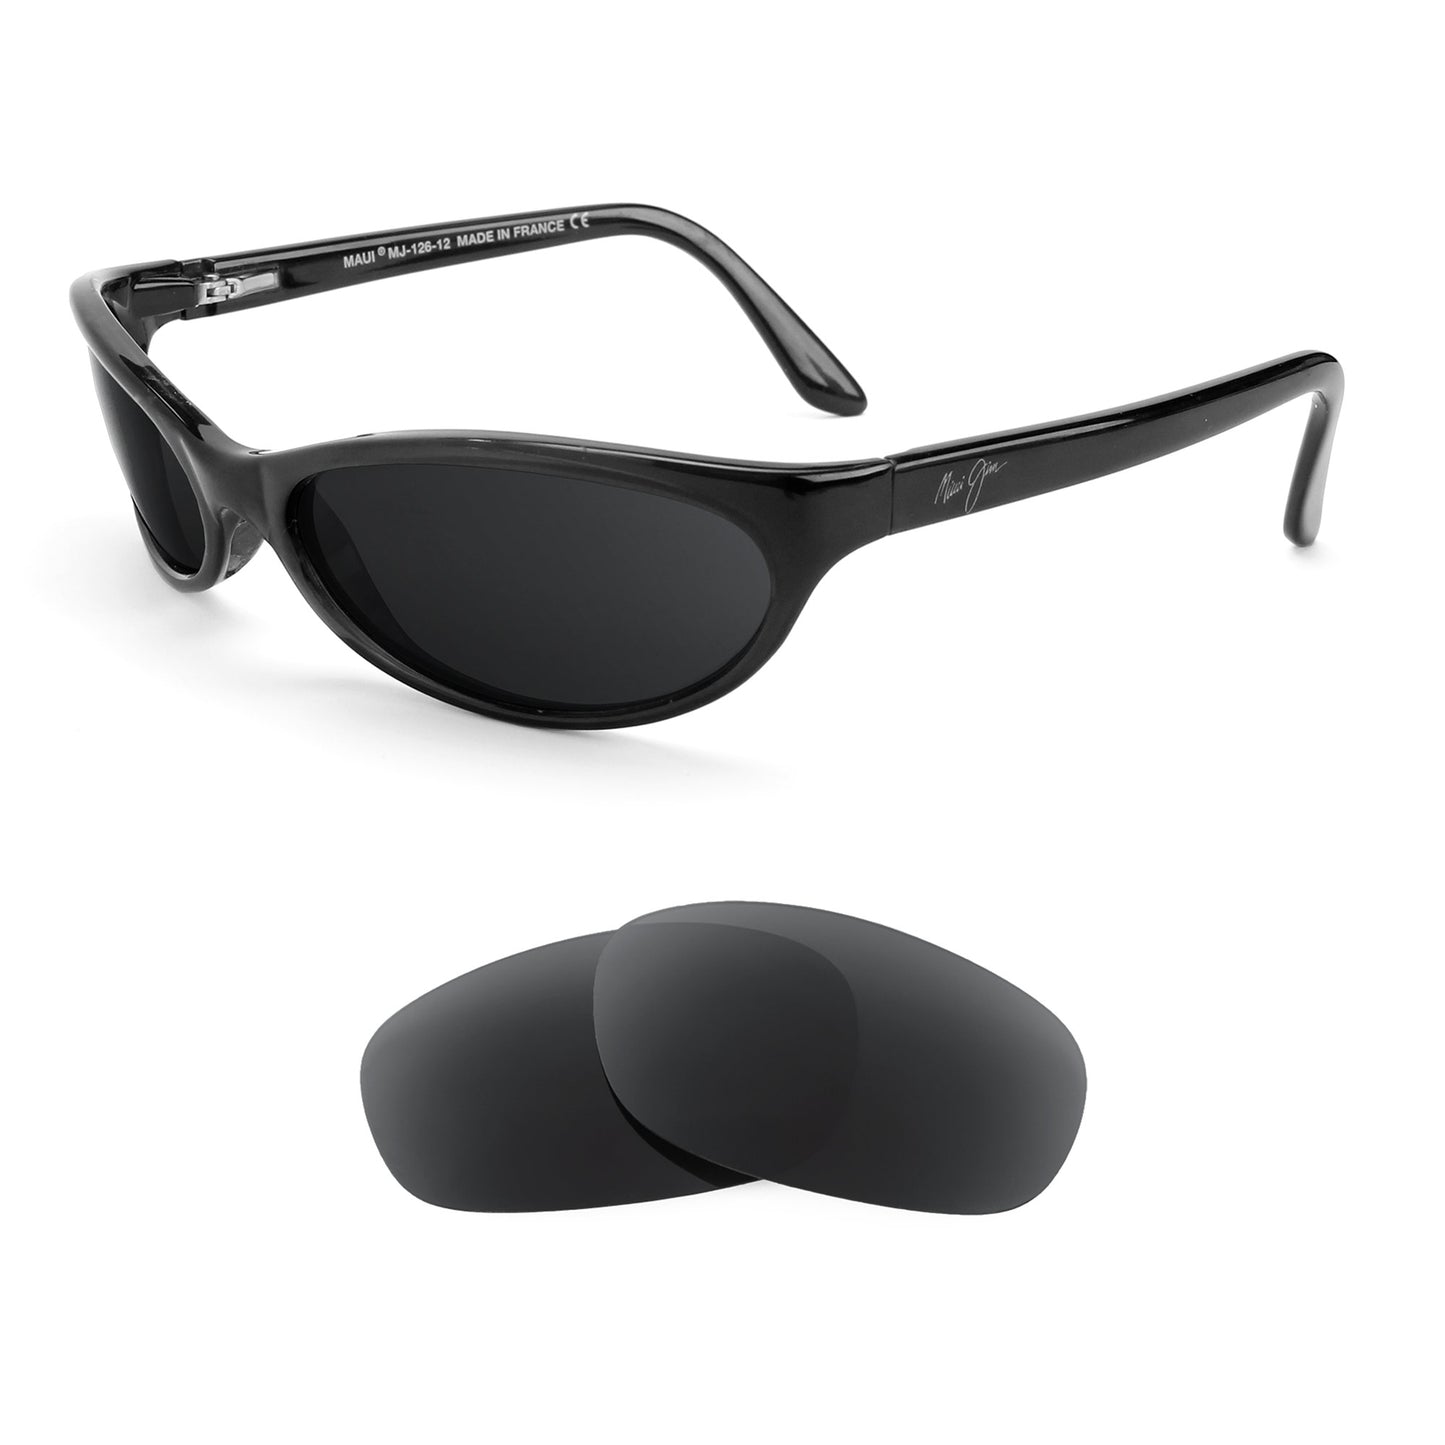 Maui Jim Riptide MJ126 sunglasses with replacement lenses